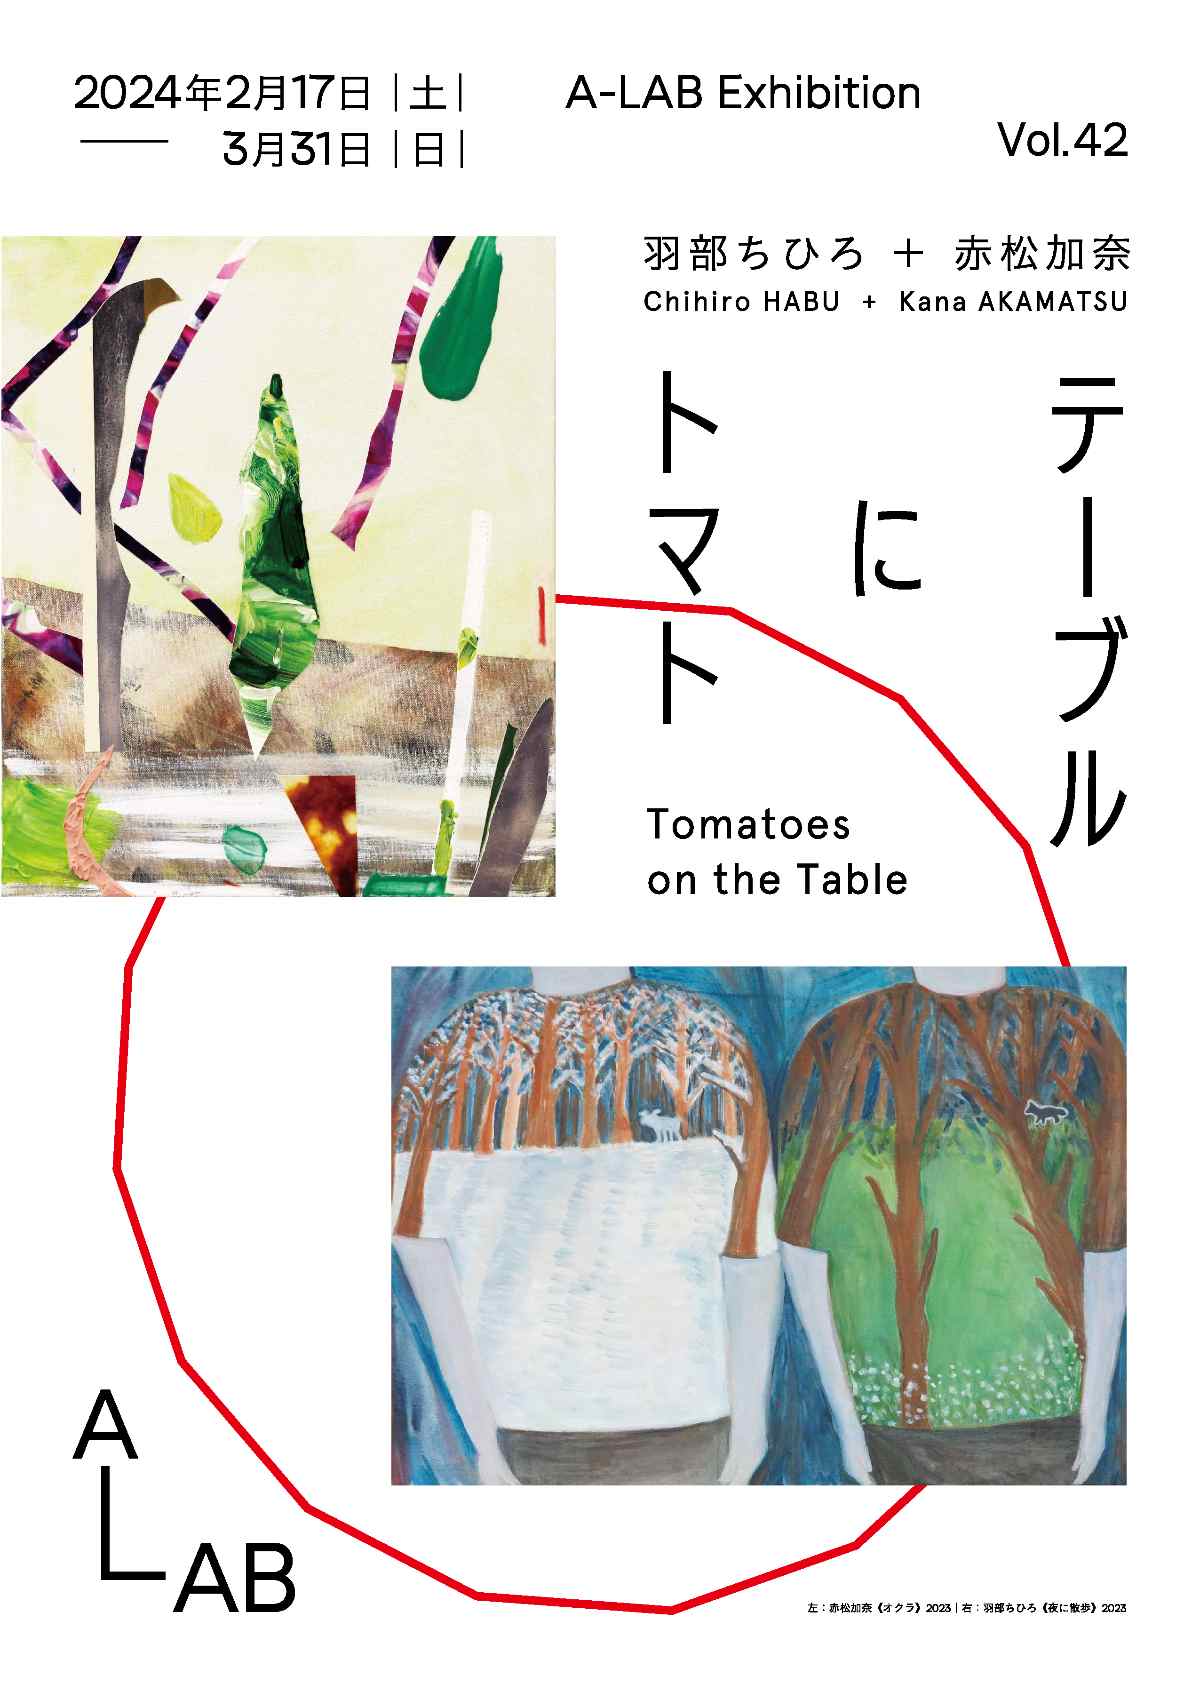 A-LABで羽部ちひろと赤松加奈の展覧会「テーブルにトマト」開催　尼崎市 [画像]